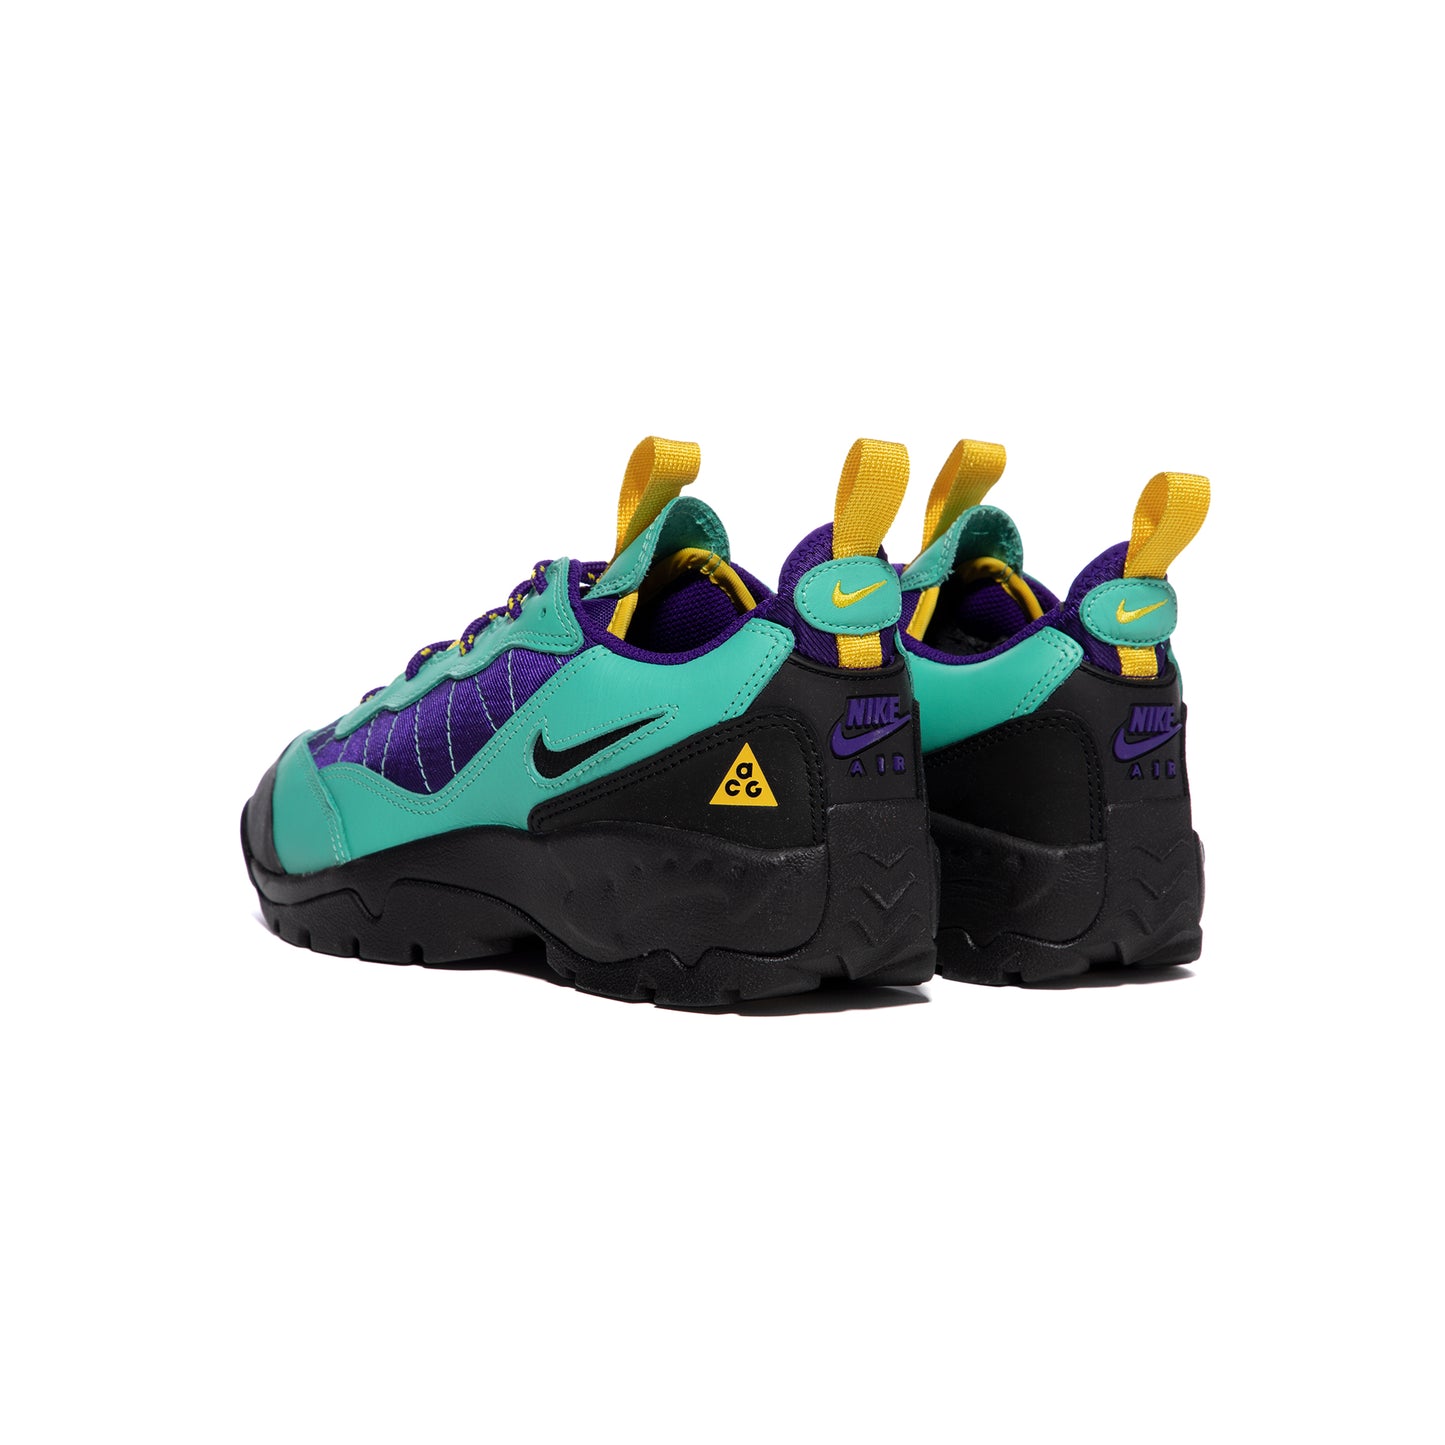 Nike ACG Air Mada (Light Menta/Black/Electro Purple)